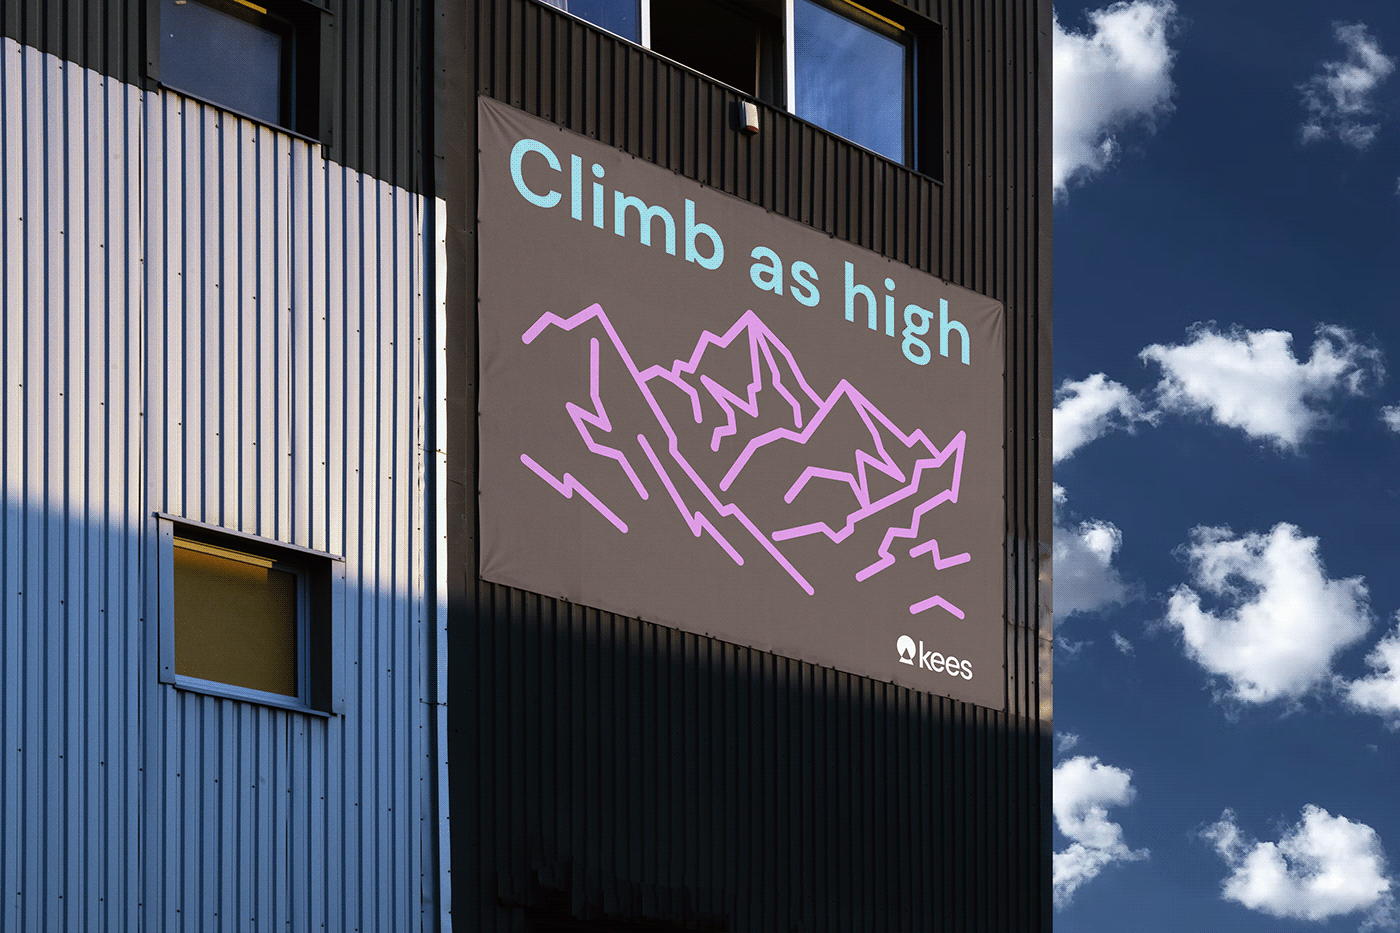 branding  brand identity colorful Creative Design Logo Design iconography visual identity Film   Mountain Climbing outdoor adventure